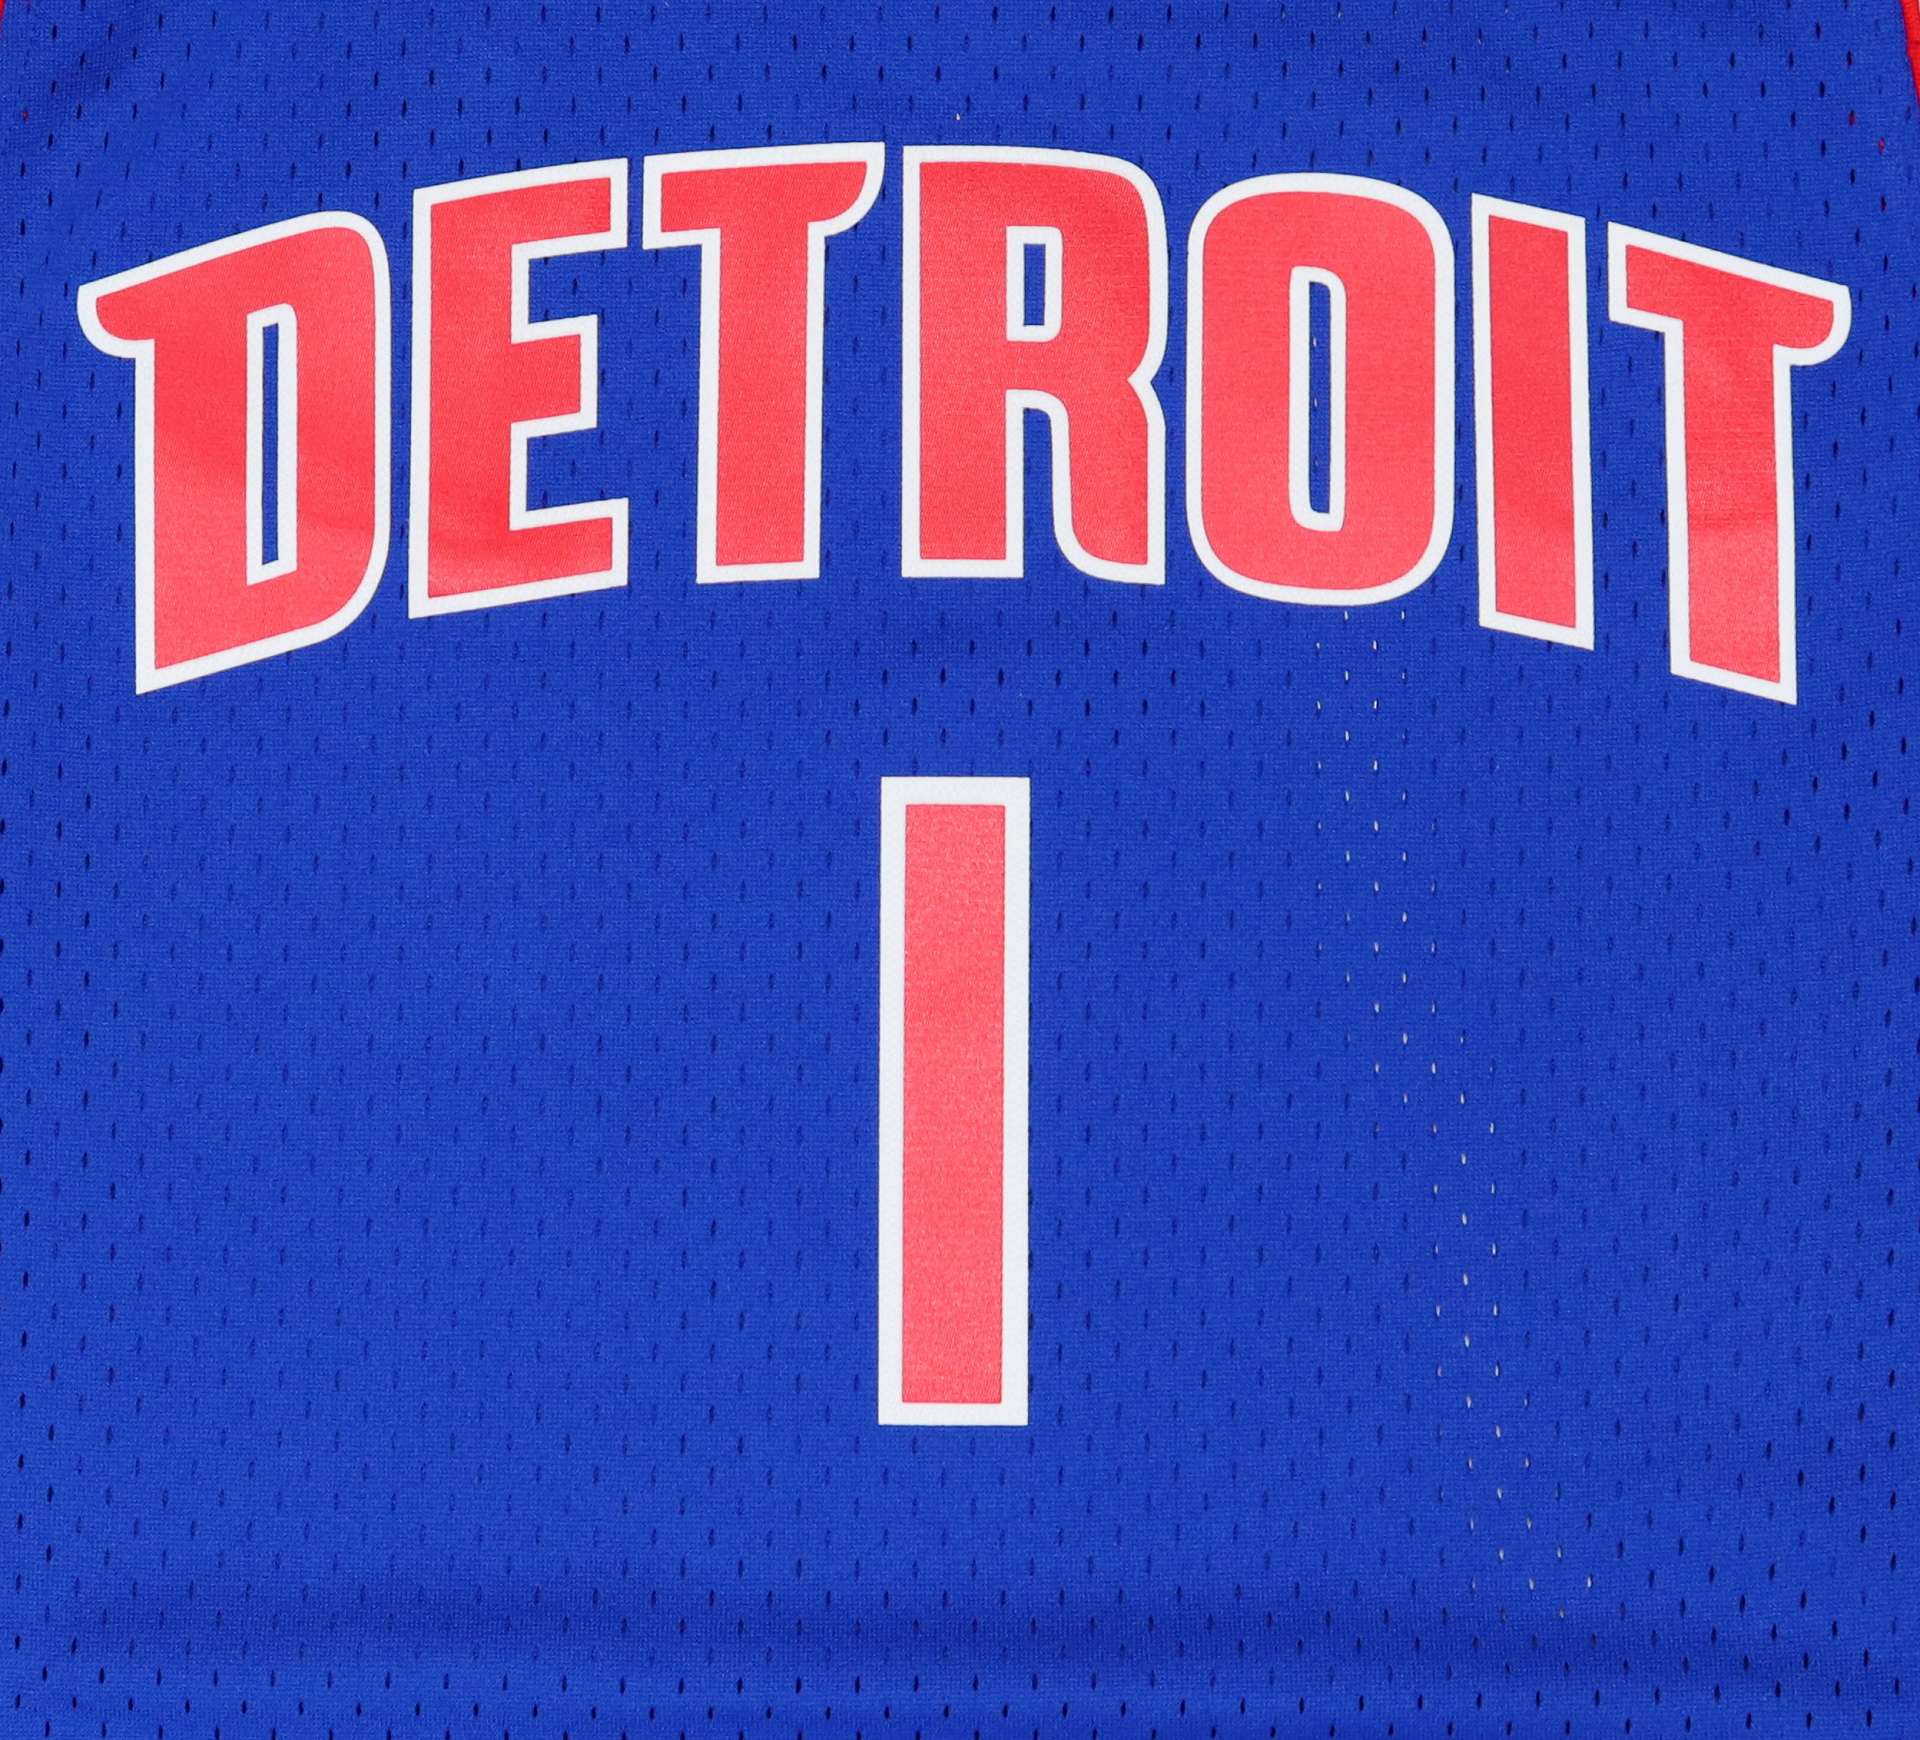 Chauncey Billups #1 Detroit Pistons NBA Swingman 2.0 Mitchell & Ness